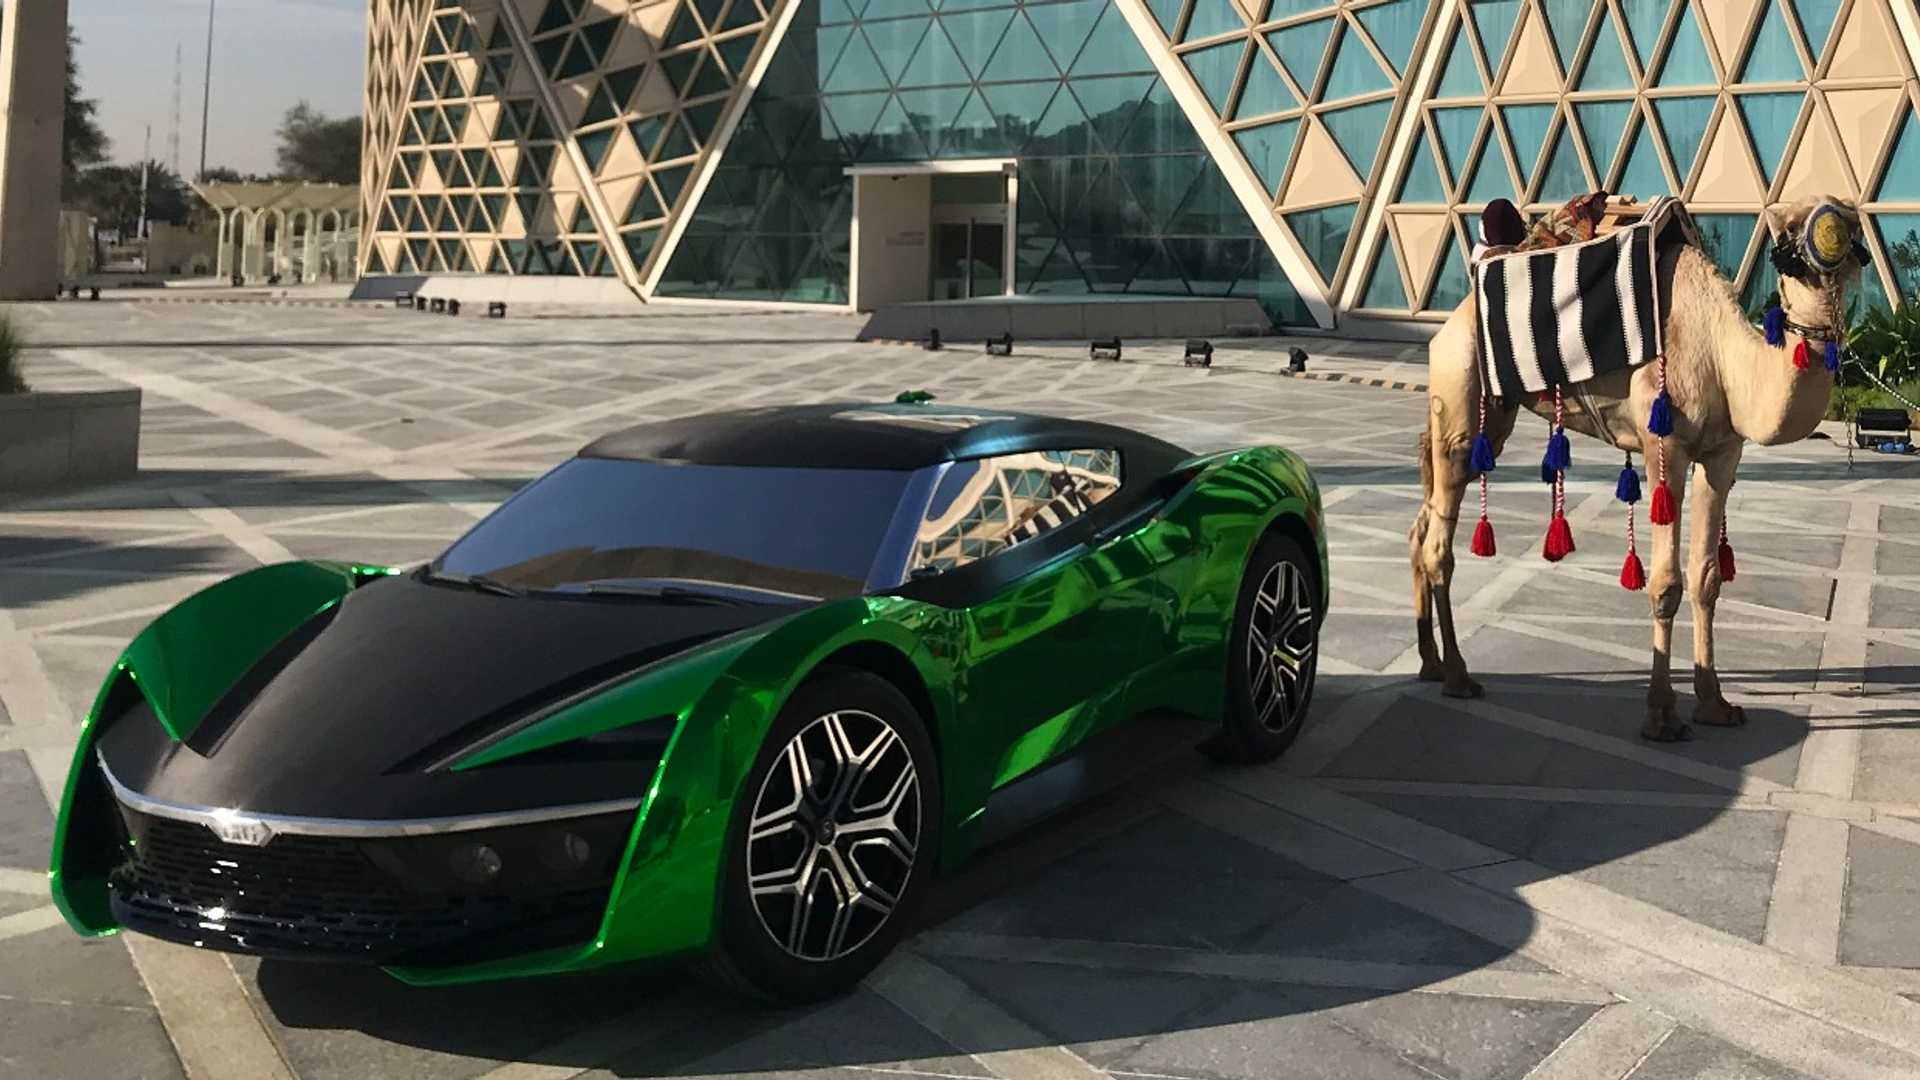 Car 2030 The OneOff, All Electric, Futuristic Car from Saudi Arabia